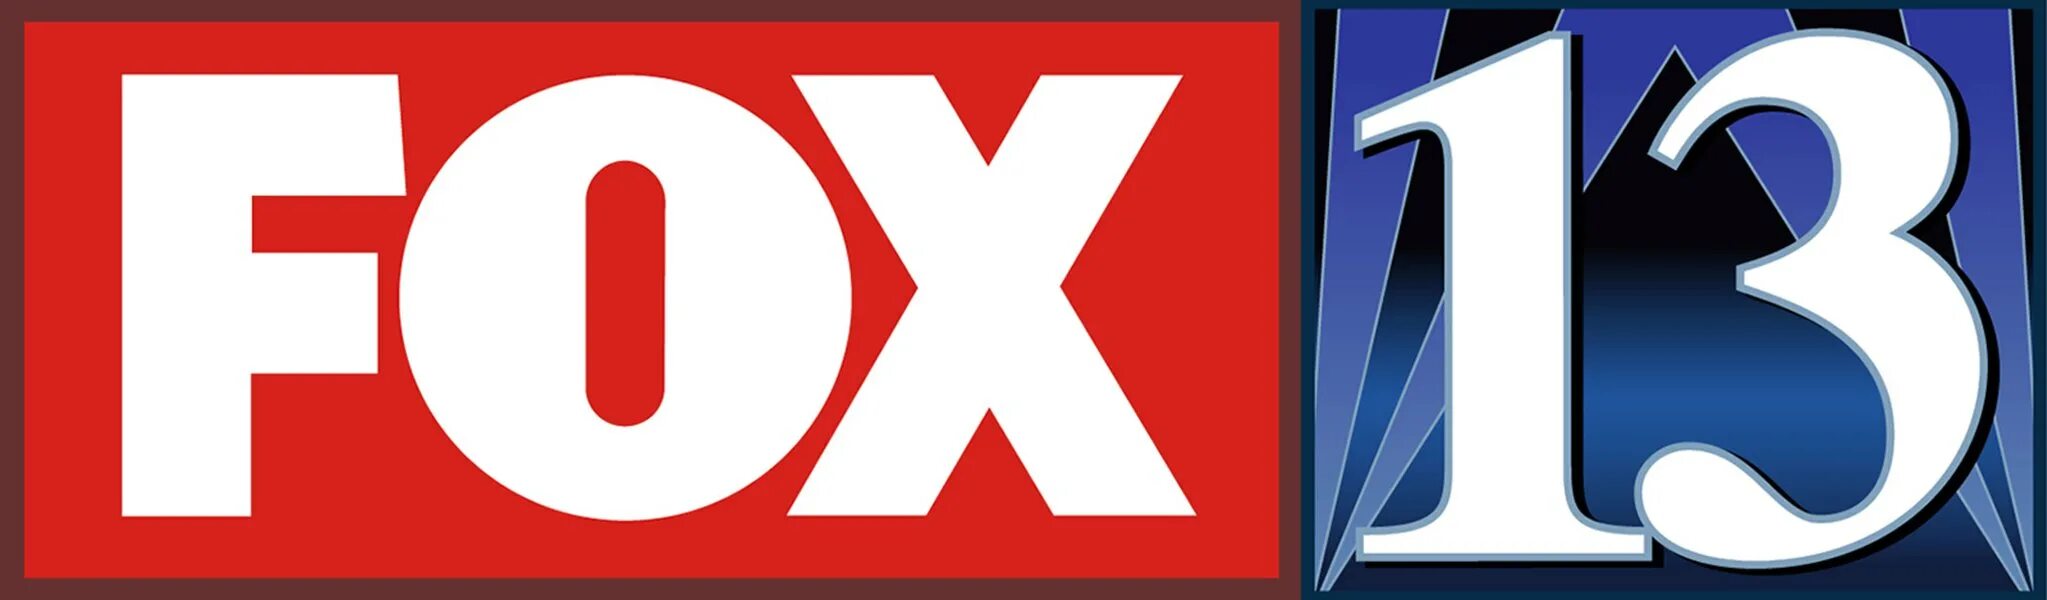 Fox 13. 13 Логотип. Логотип KSTU. Fox Broadcasting Company logo. Команда 13 лого.